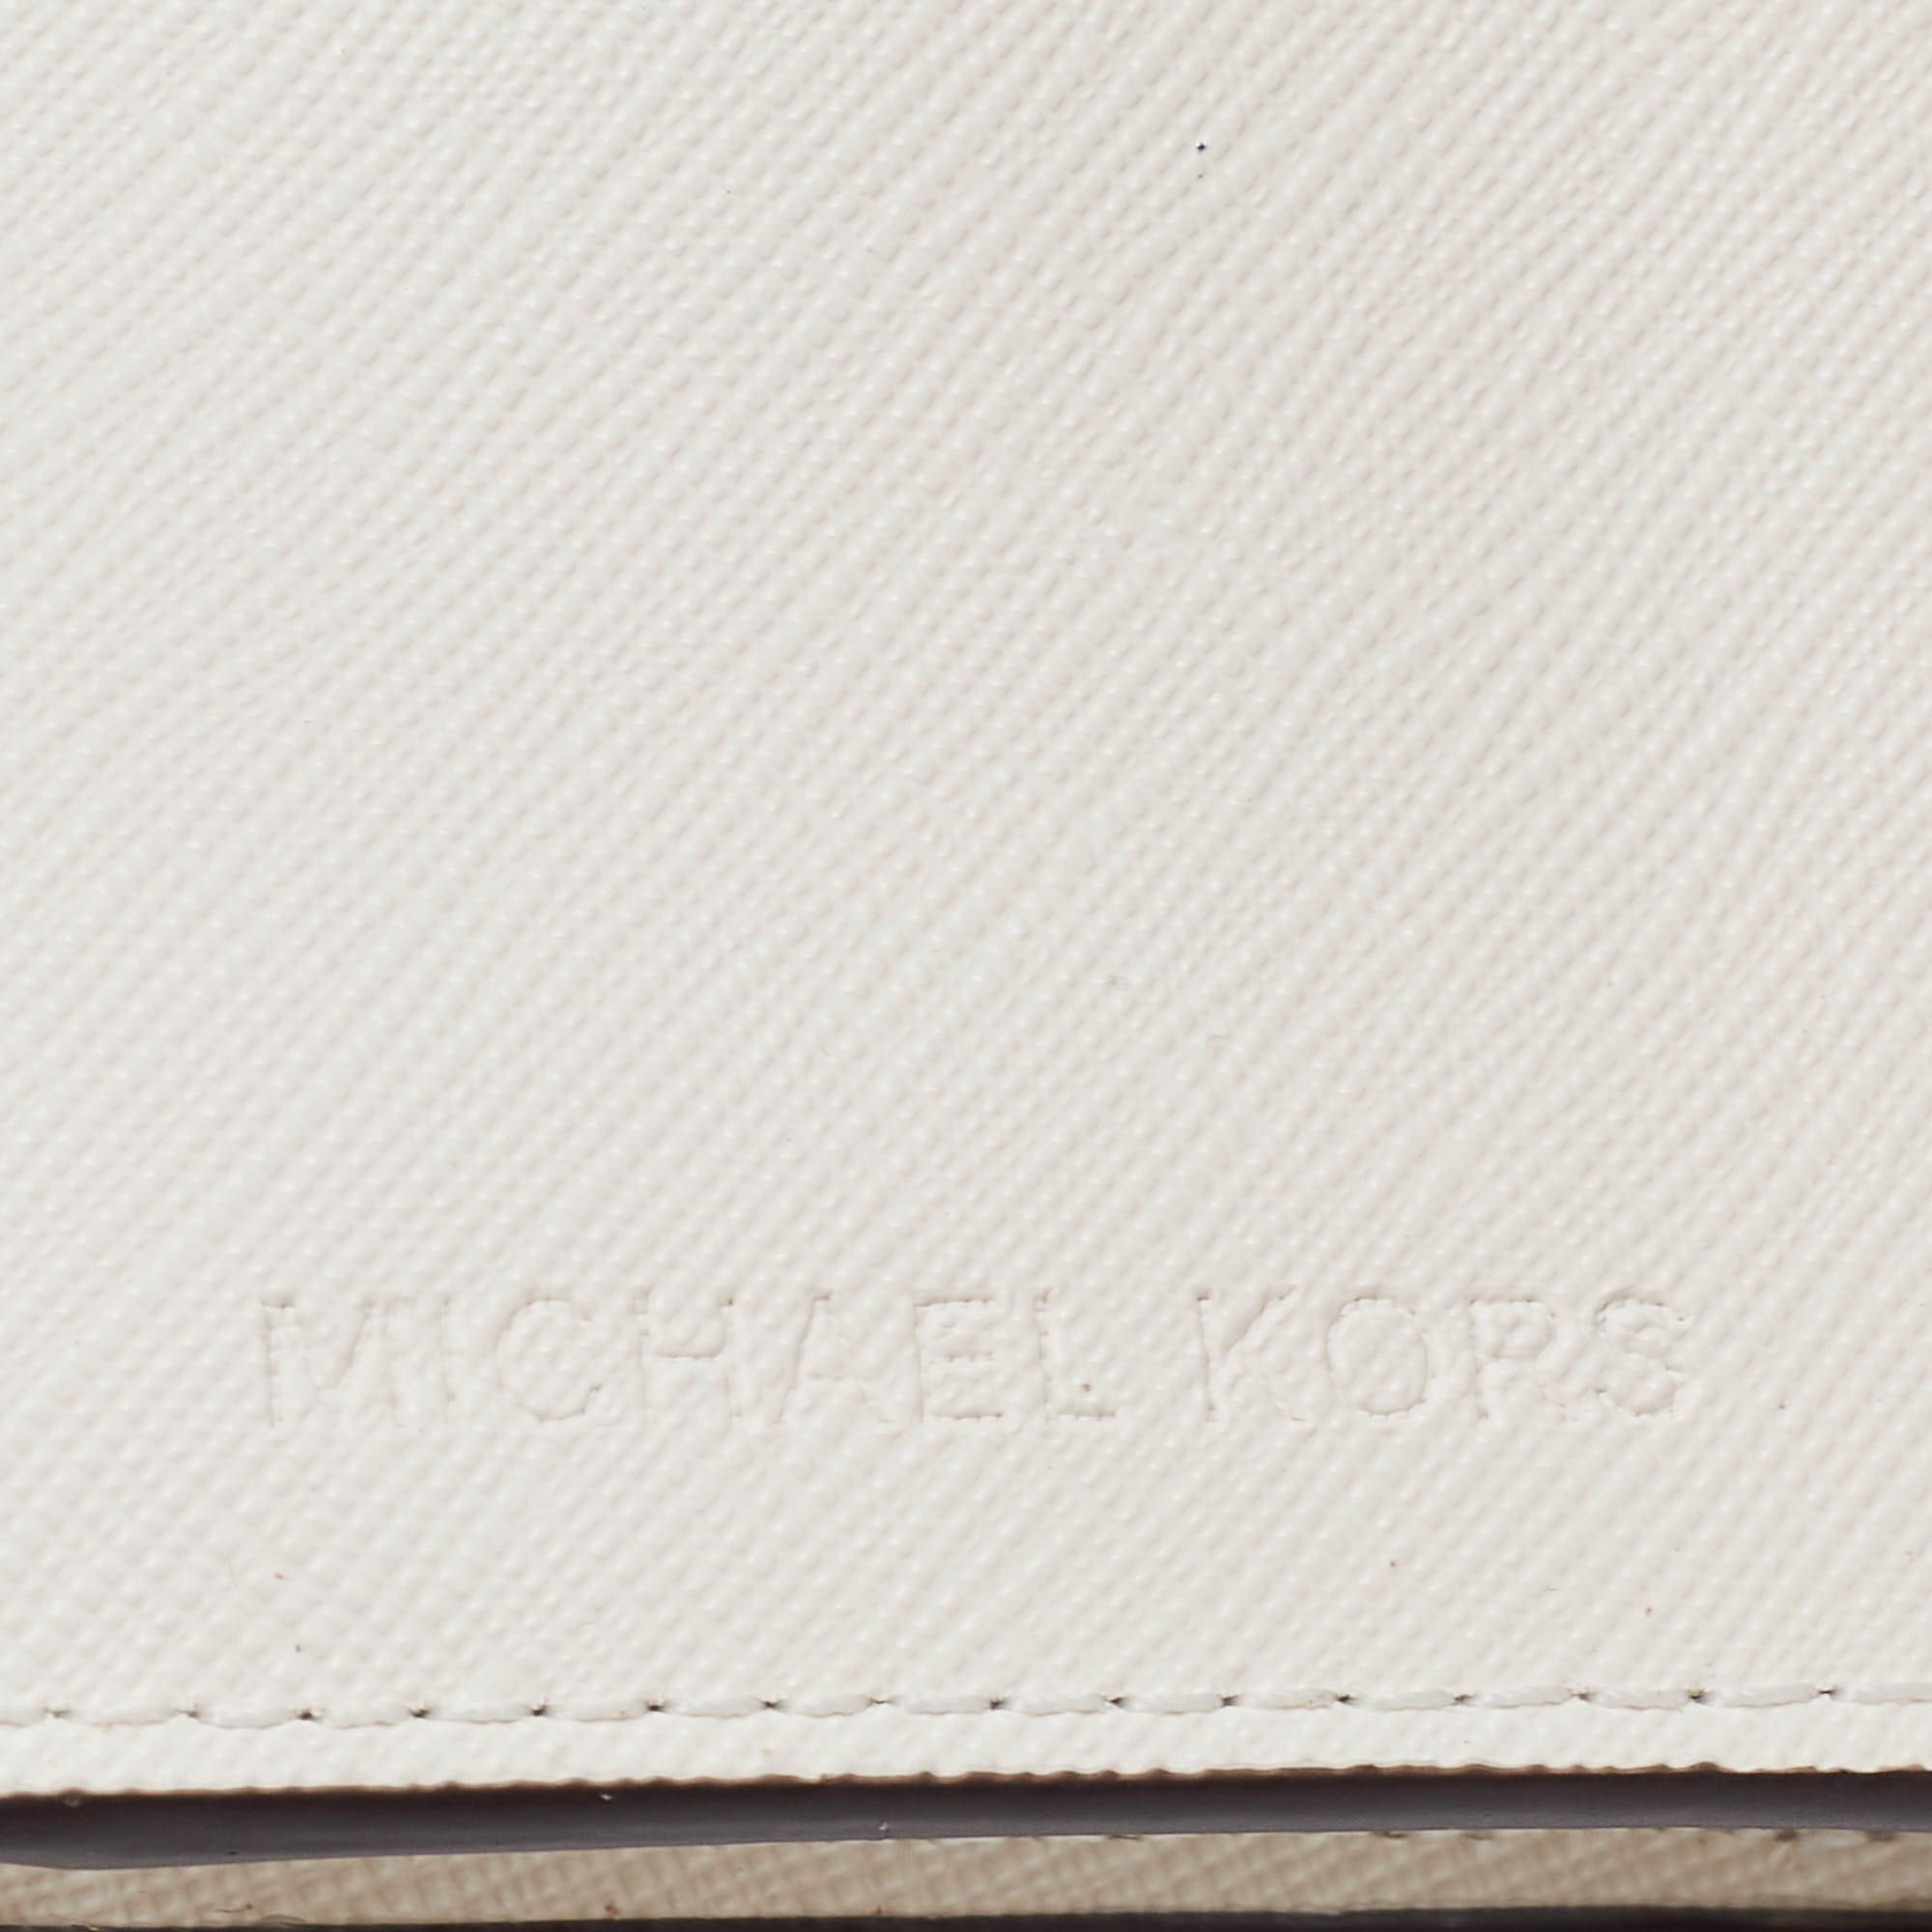 Michael Kors White Leather Jet Set Travel Zip Bifold Wallet